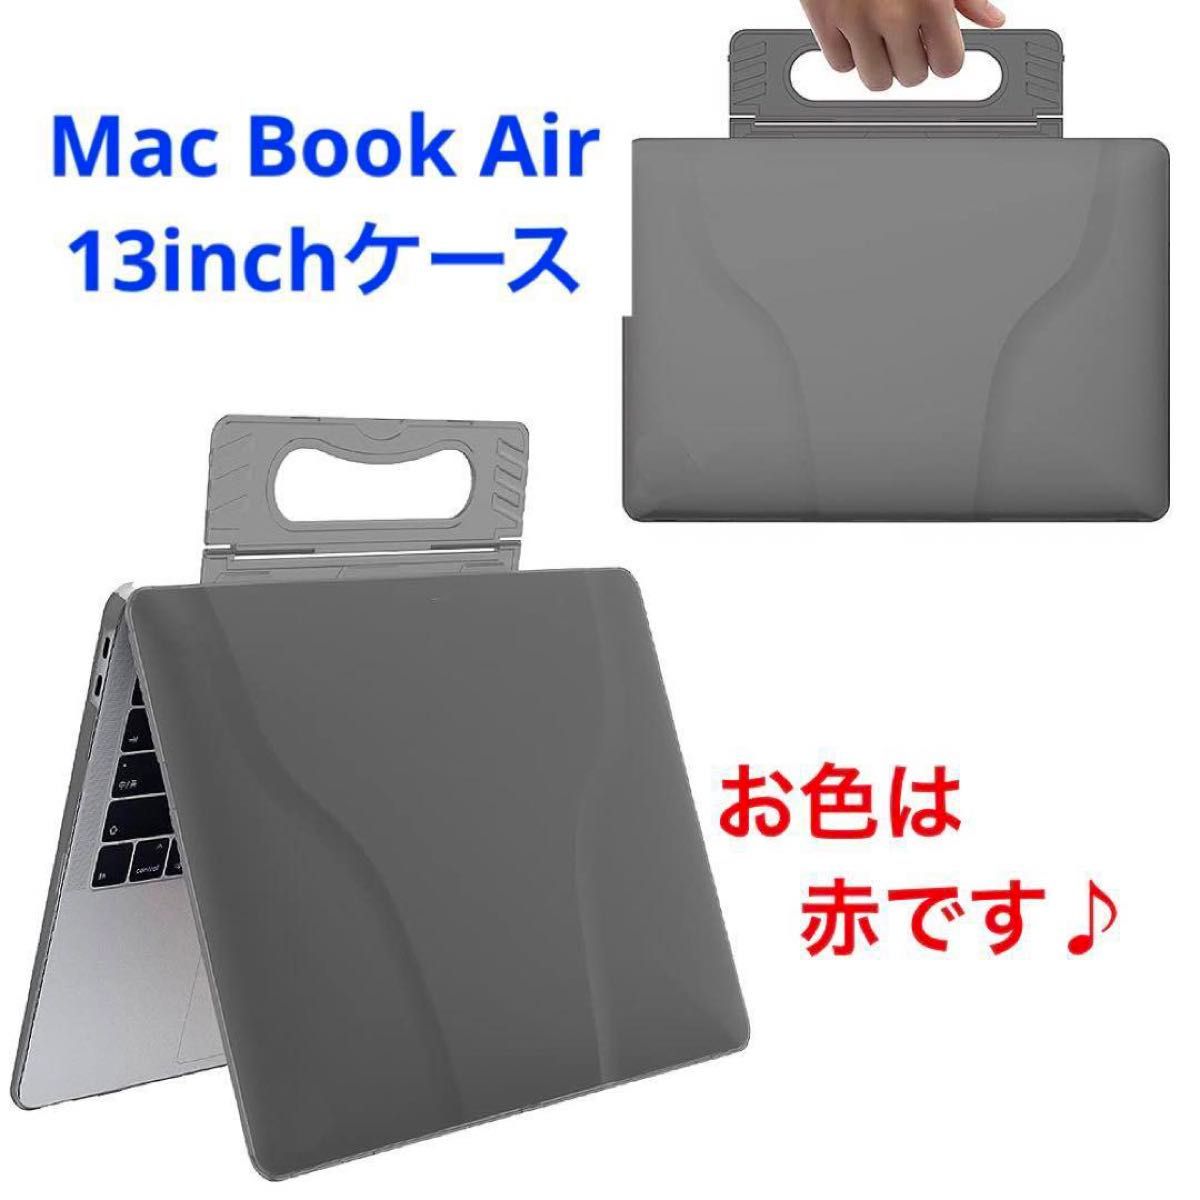 PAREMPI Mac Book Air 13inch用 スタンド付PCケース